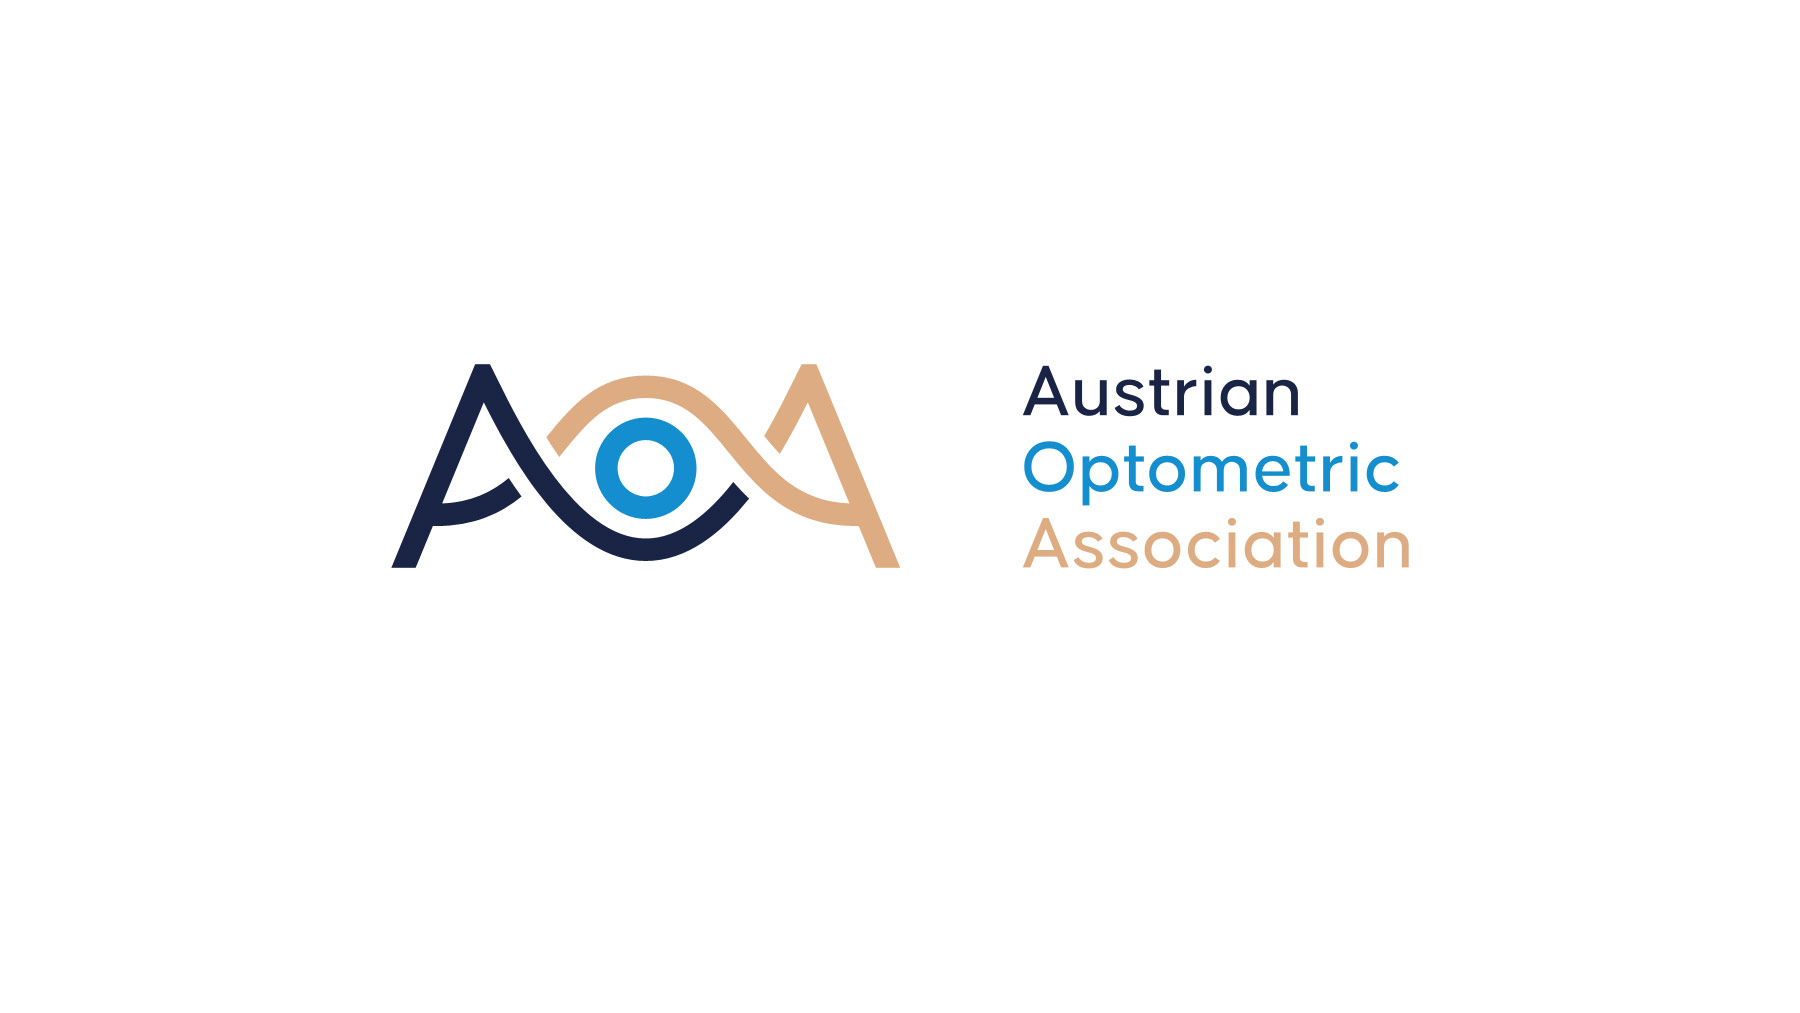 Austrian Optometric Association